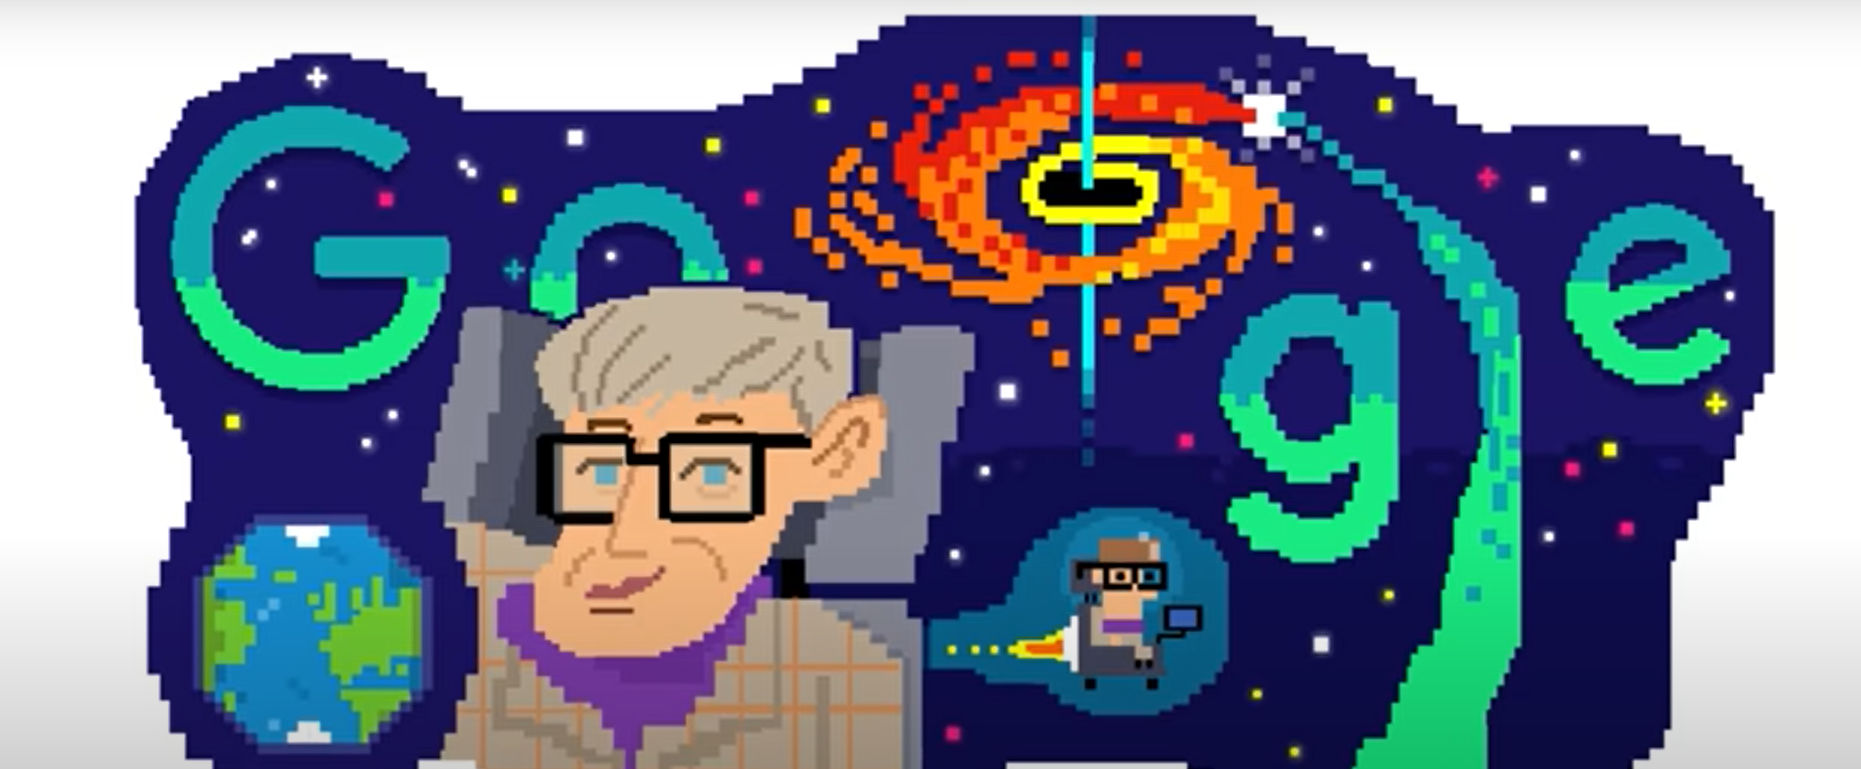 Google Doodle celebrates Stephen Hawking’s 80th birthday